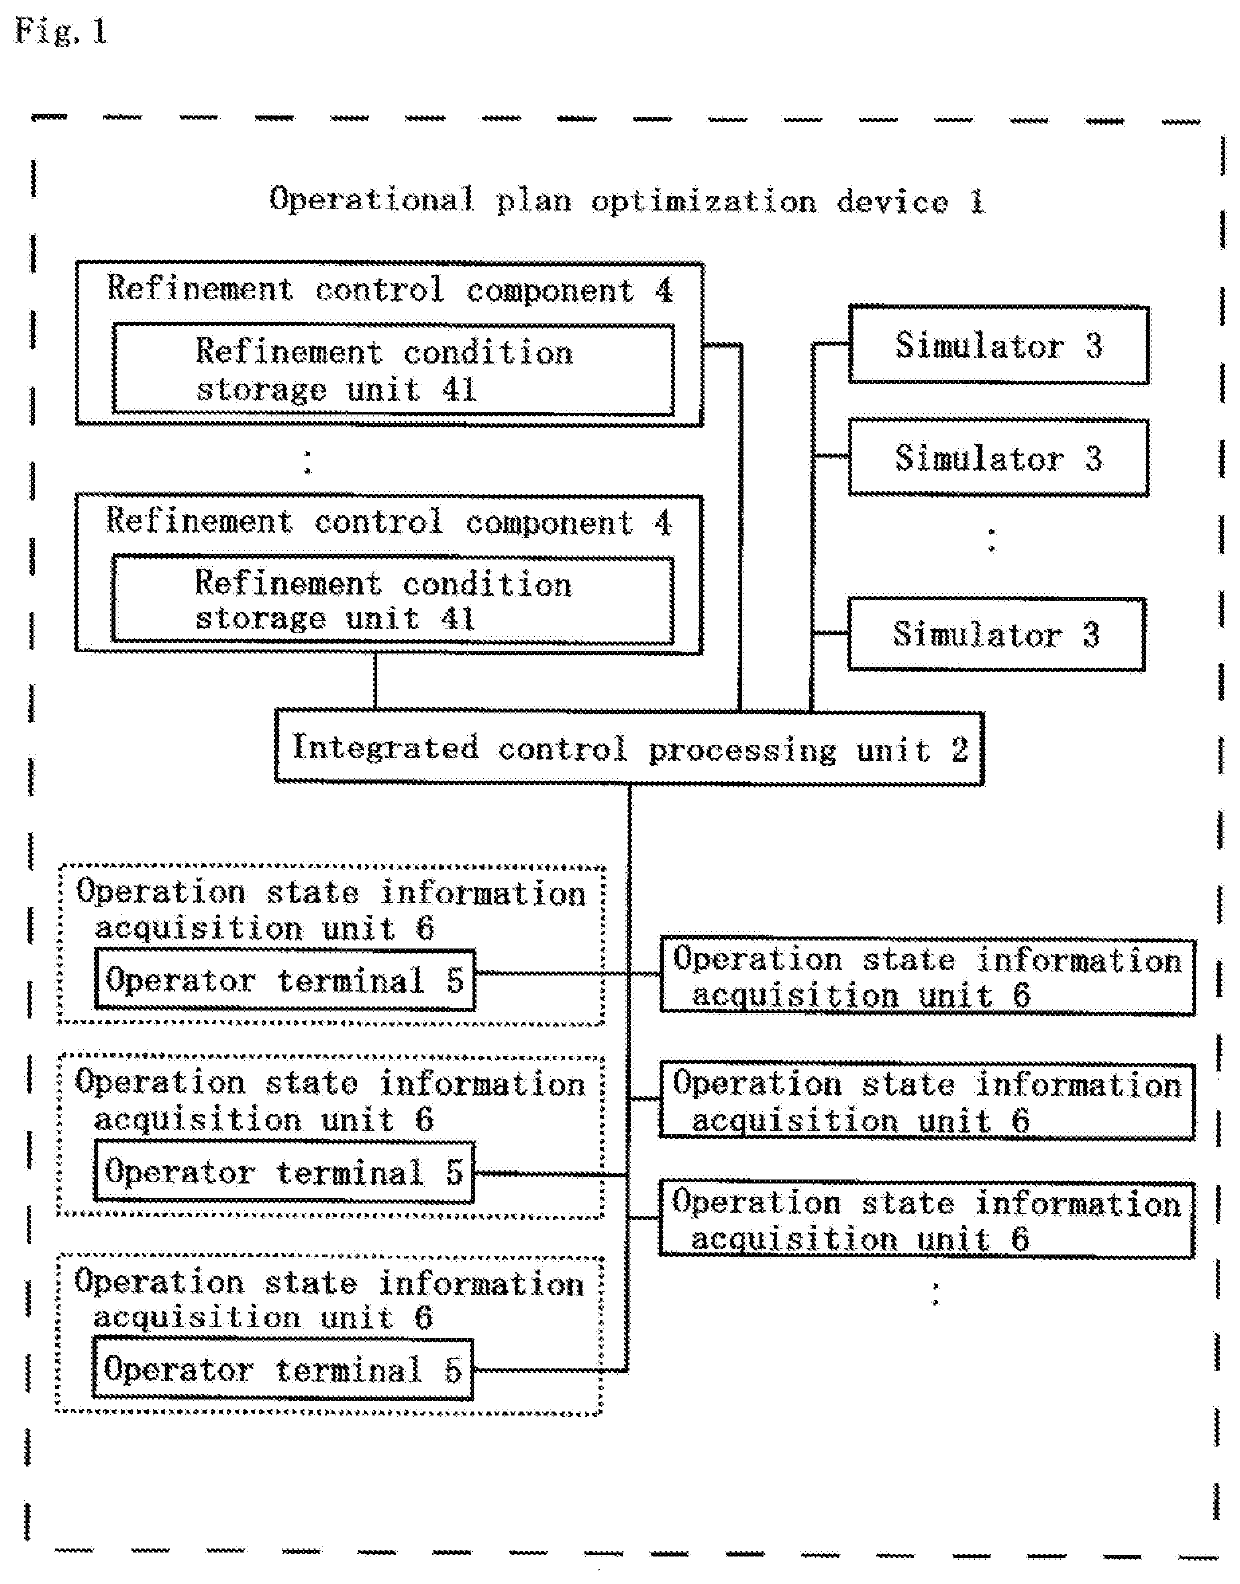 Operational plan optimization device and operational plan optimization method